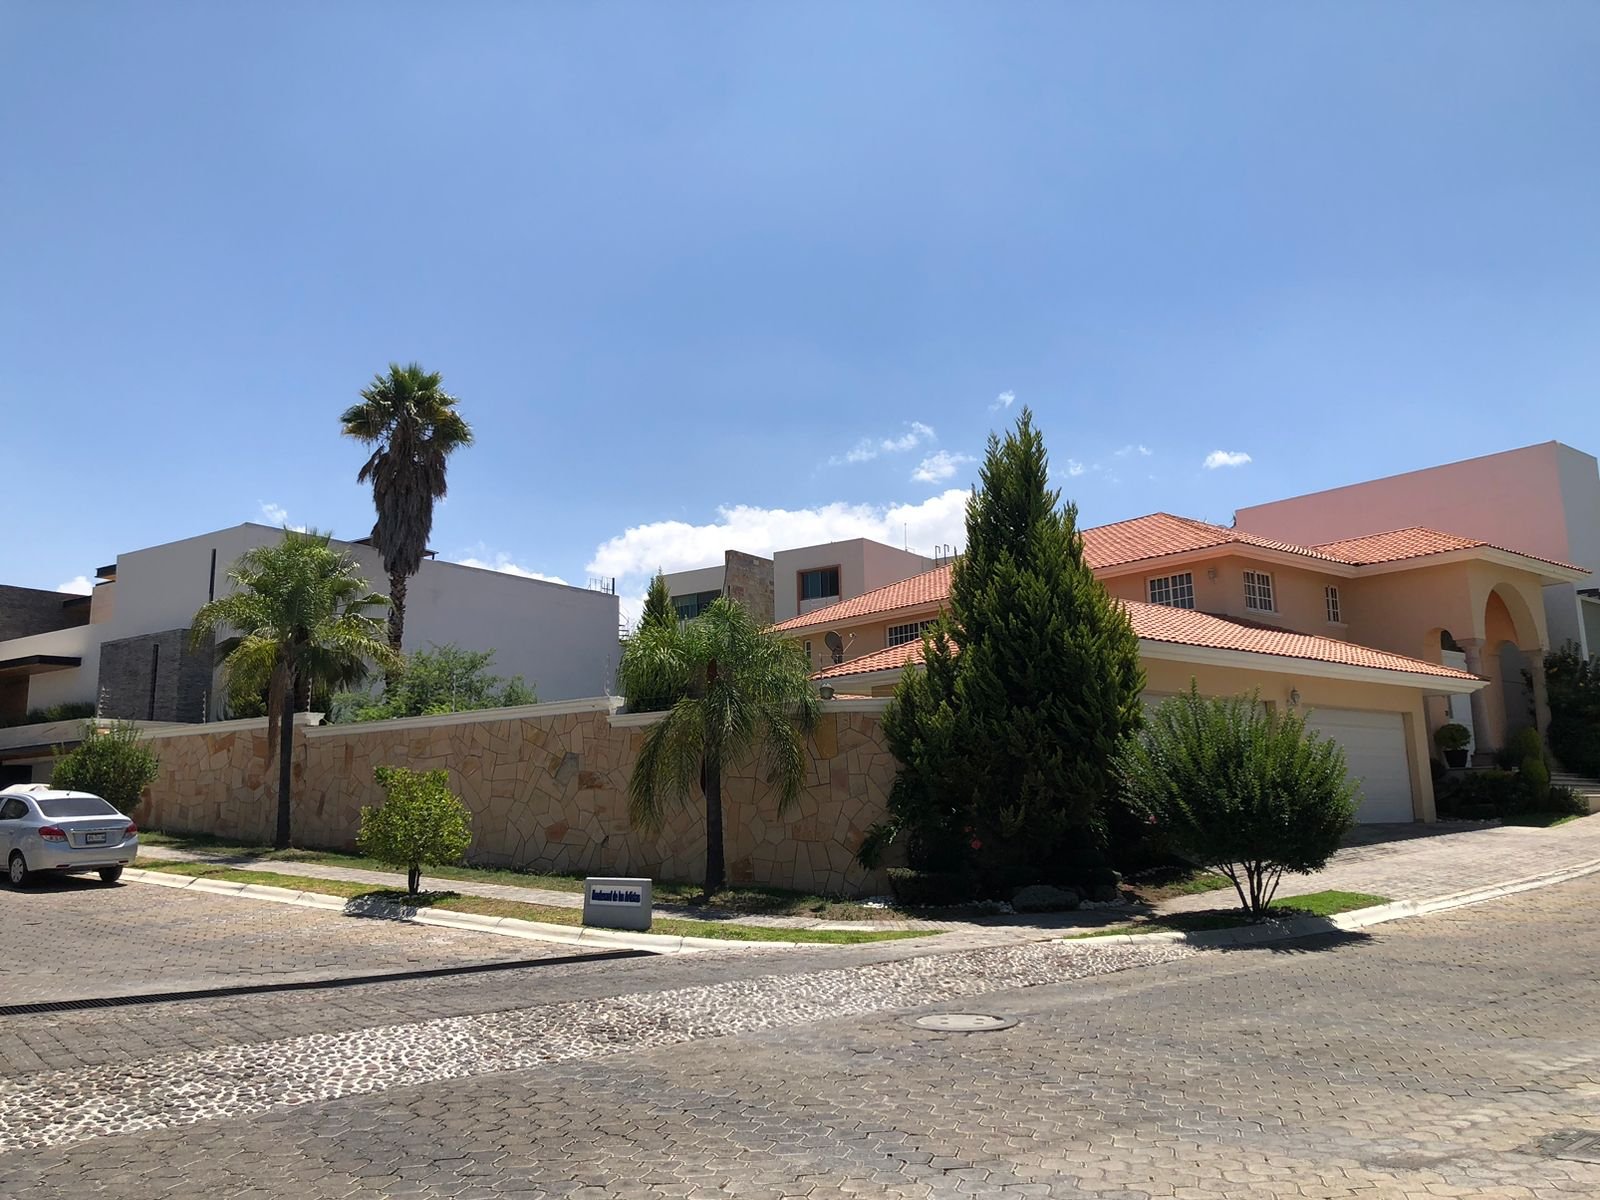 2. Venta Casa Lomas De Angelopolis I